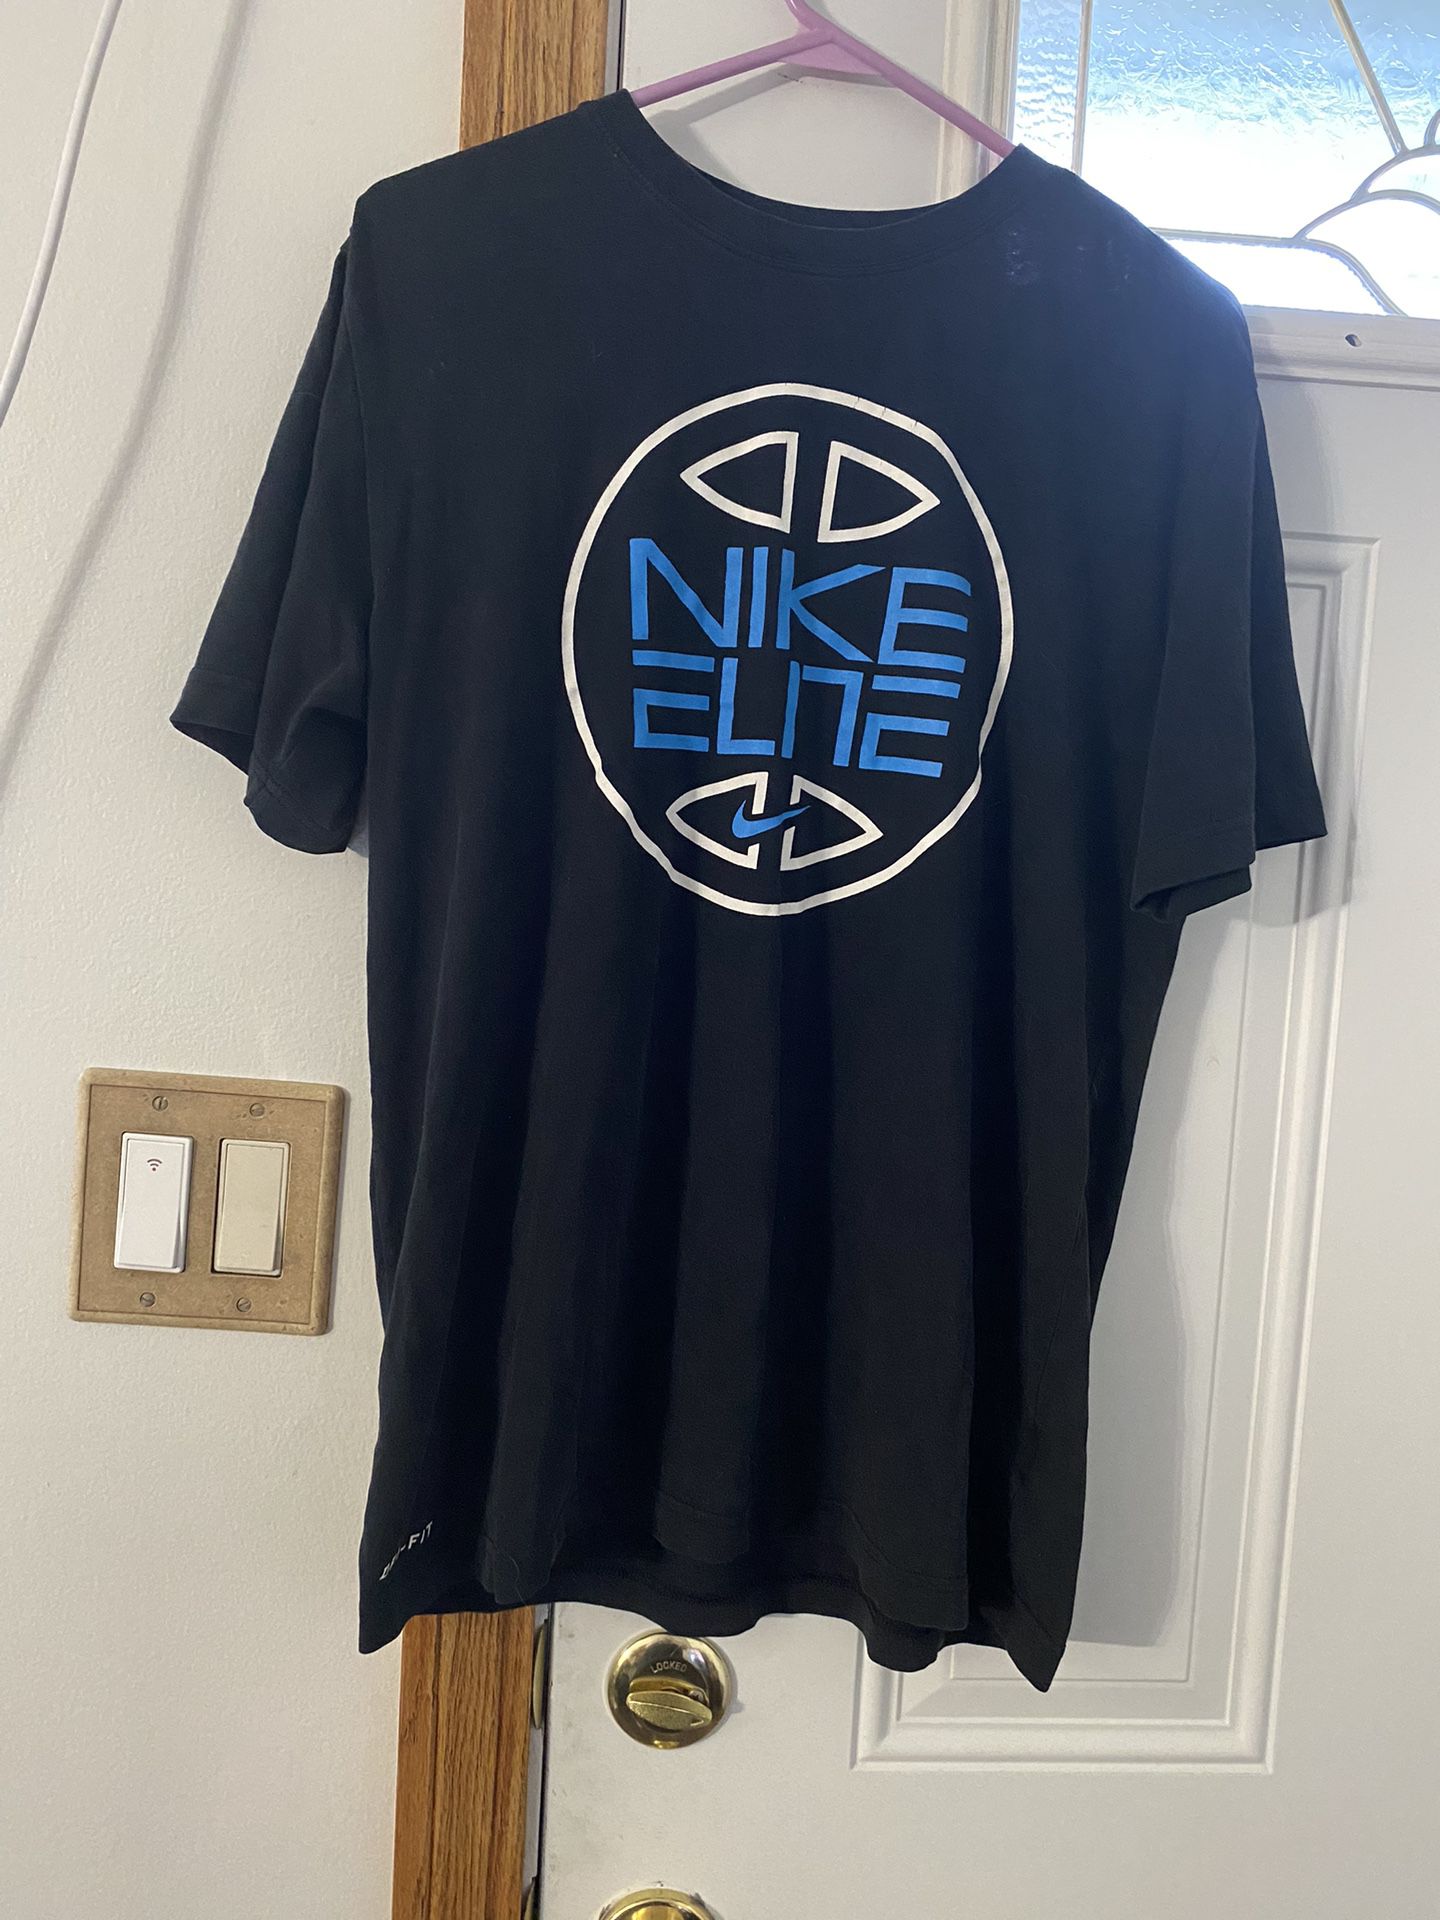 Nike Elite Shirt Size Medium